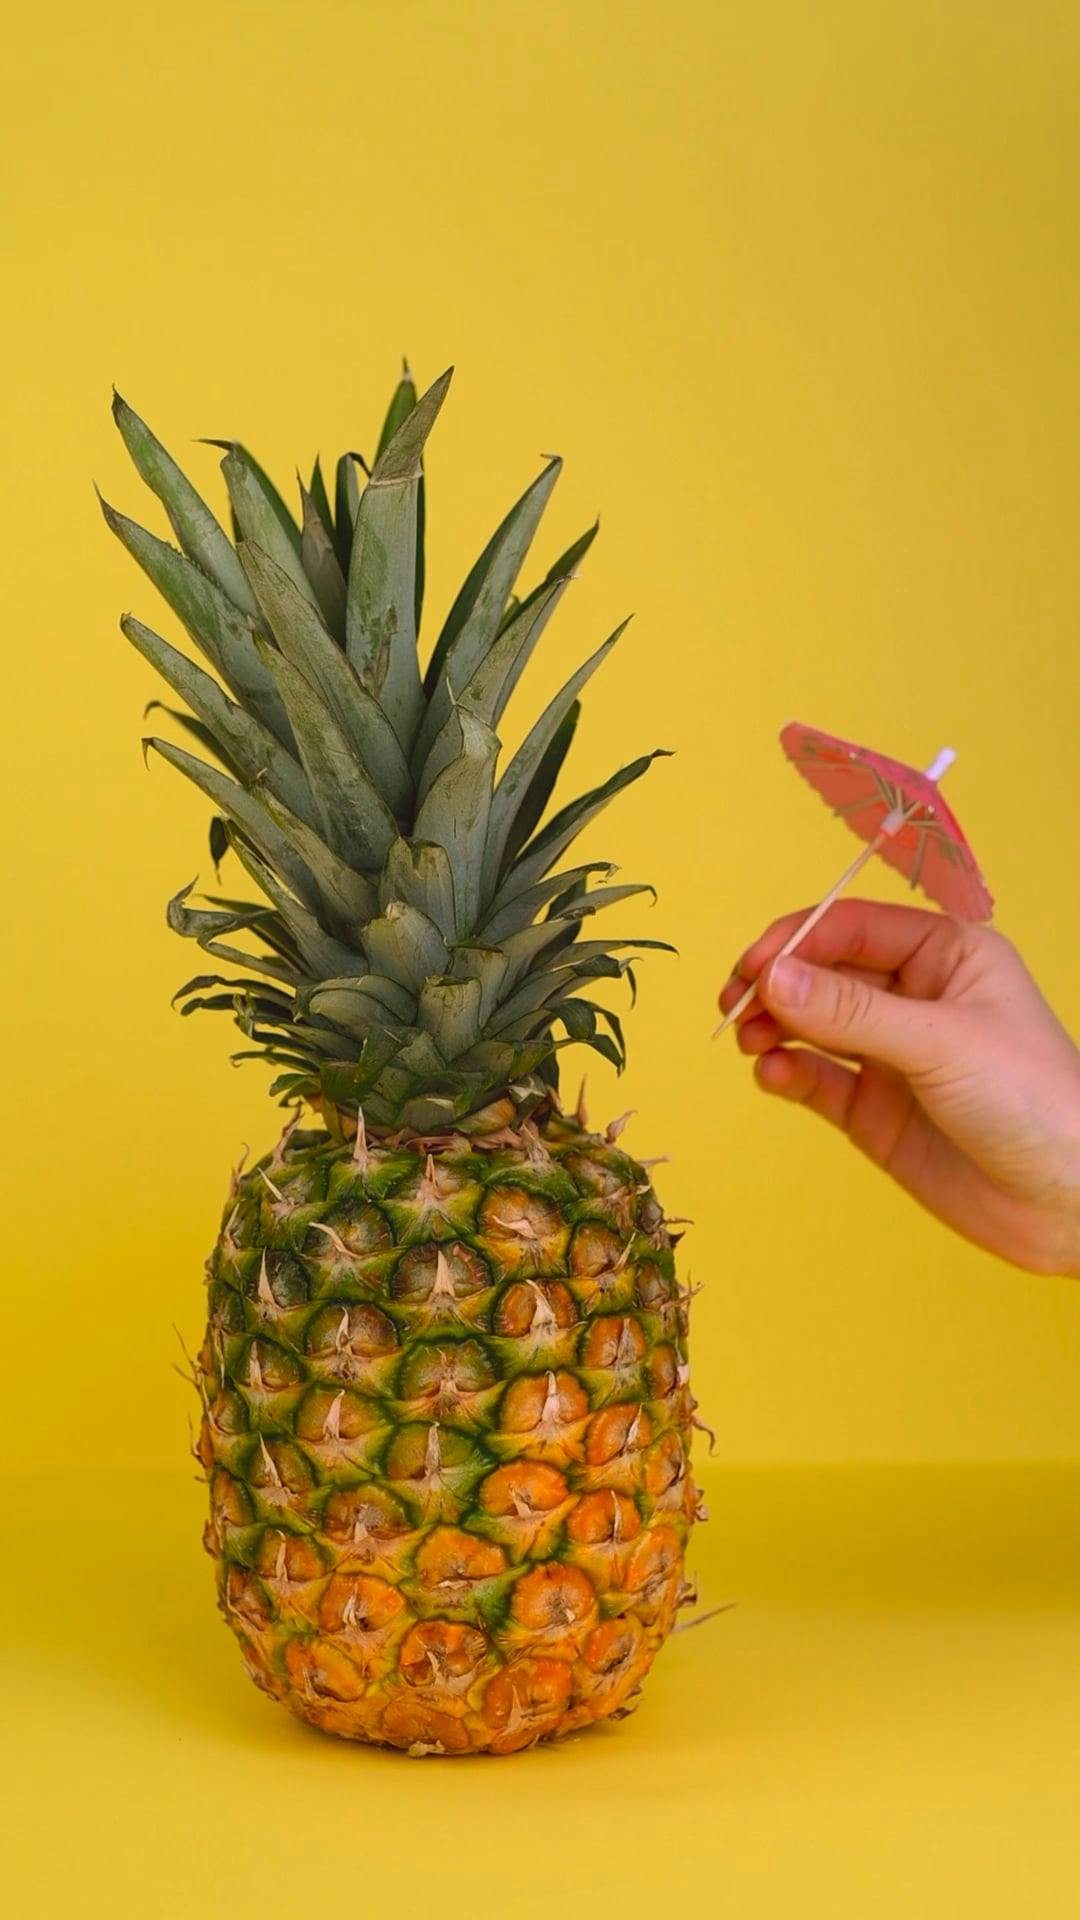 Sticking a Small Umbrella on a Pineapple \u00b7 Free Stock Video